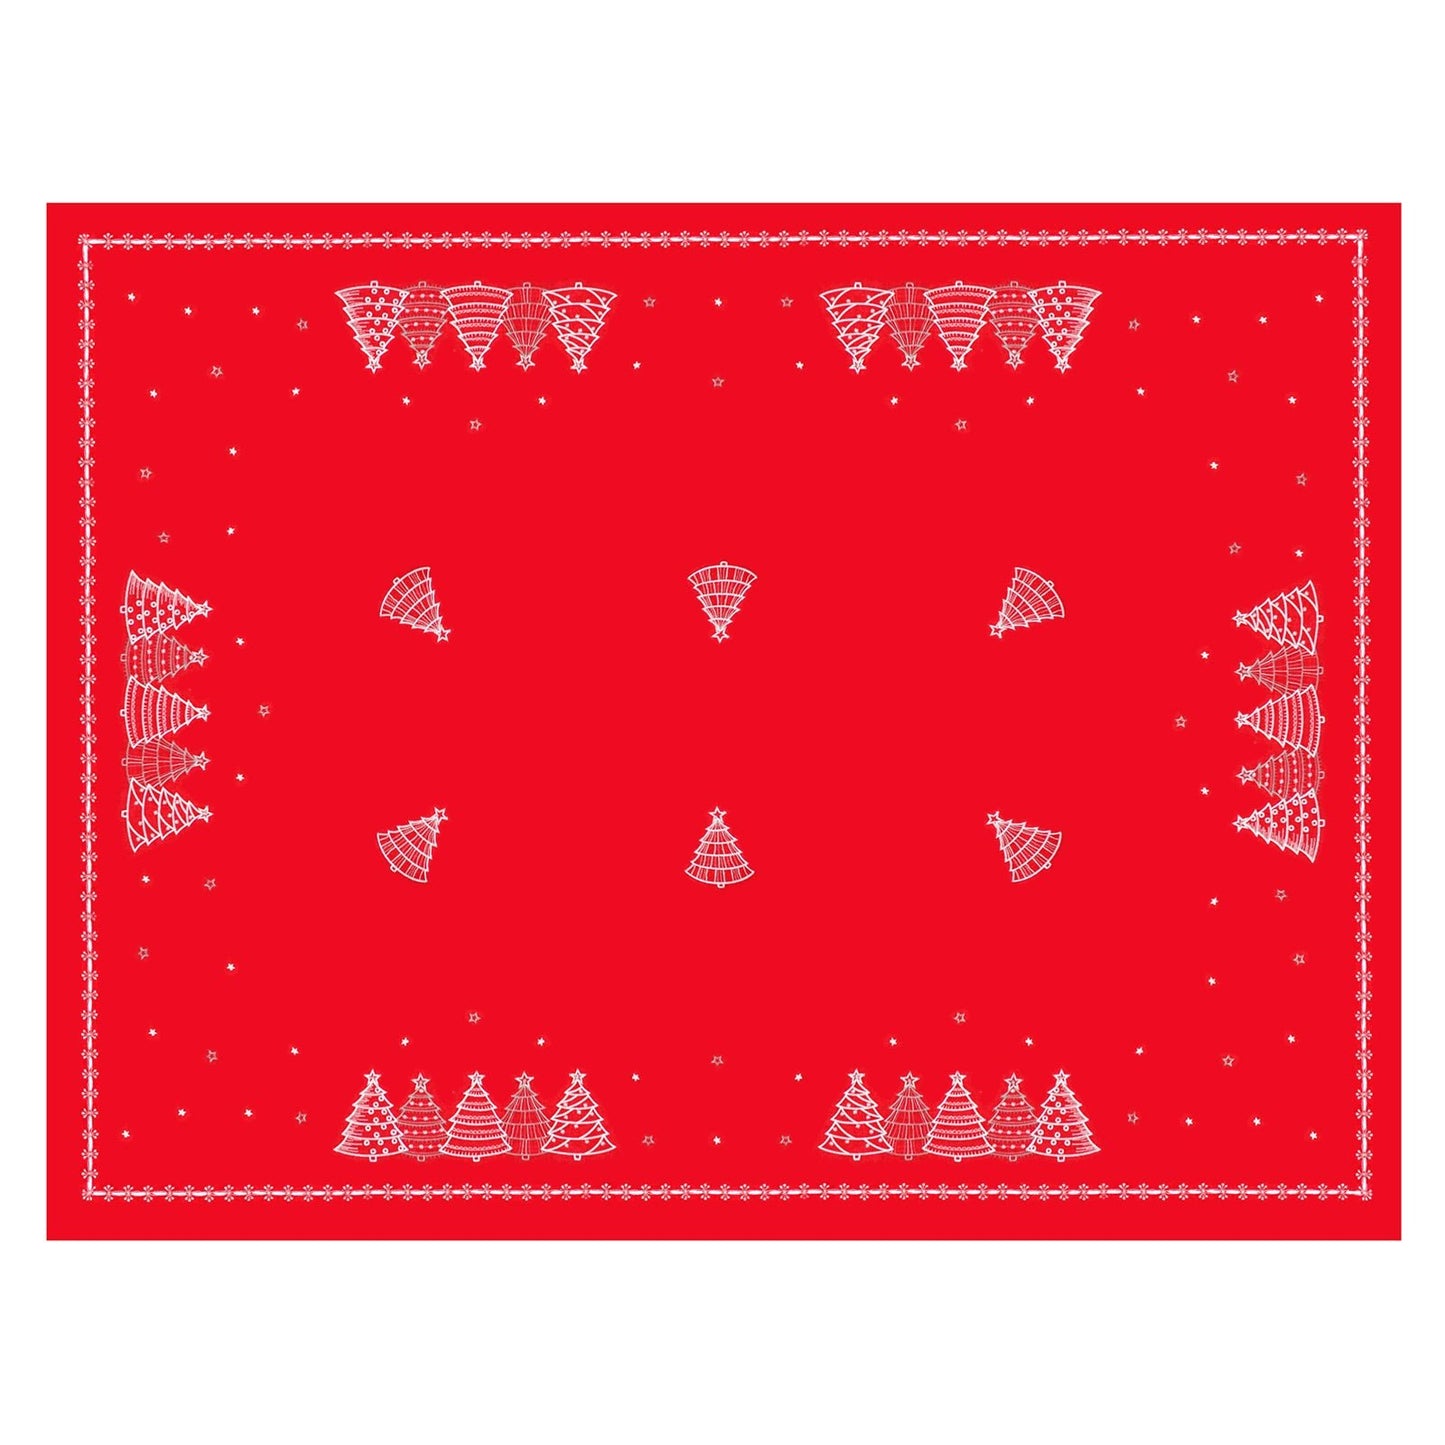 Mr Crimbo Red Christmas Tablecloth Napkins Silver Tree Stars - MrCrimbo.co.uk -XS6568 - 52 x 70" -christmas napkins